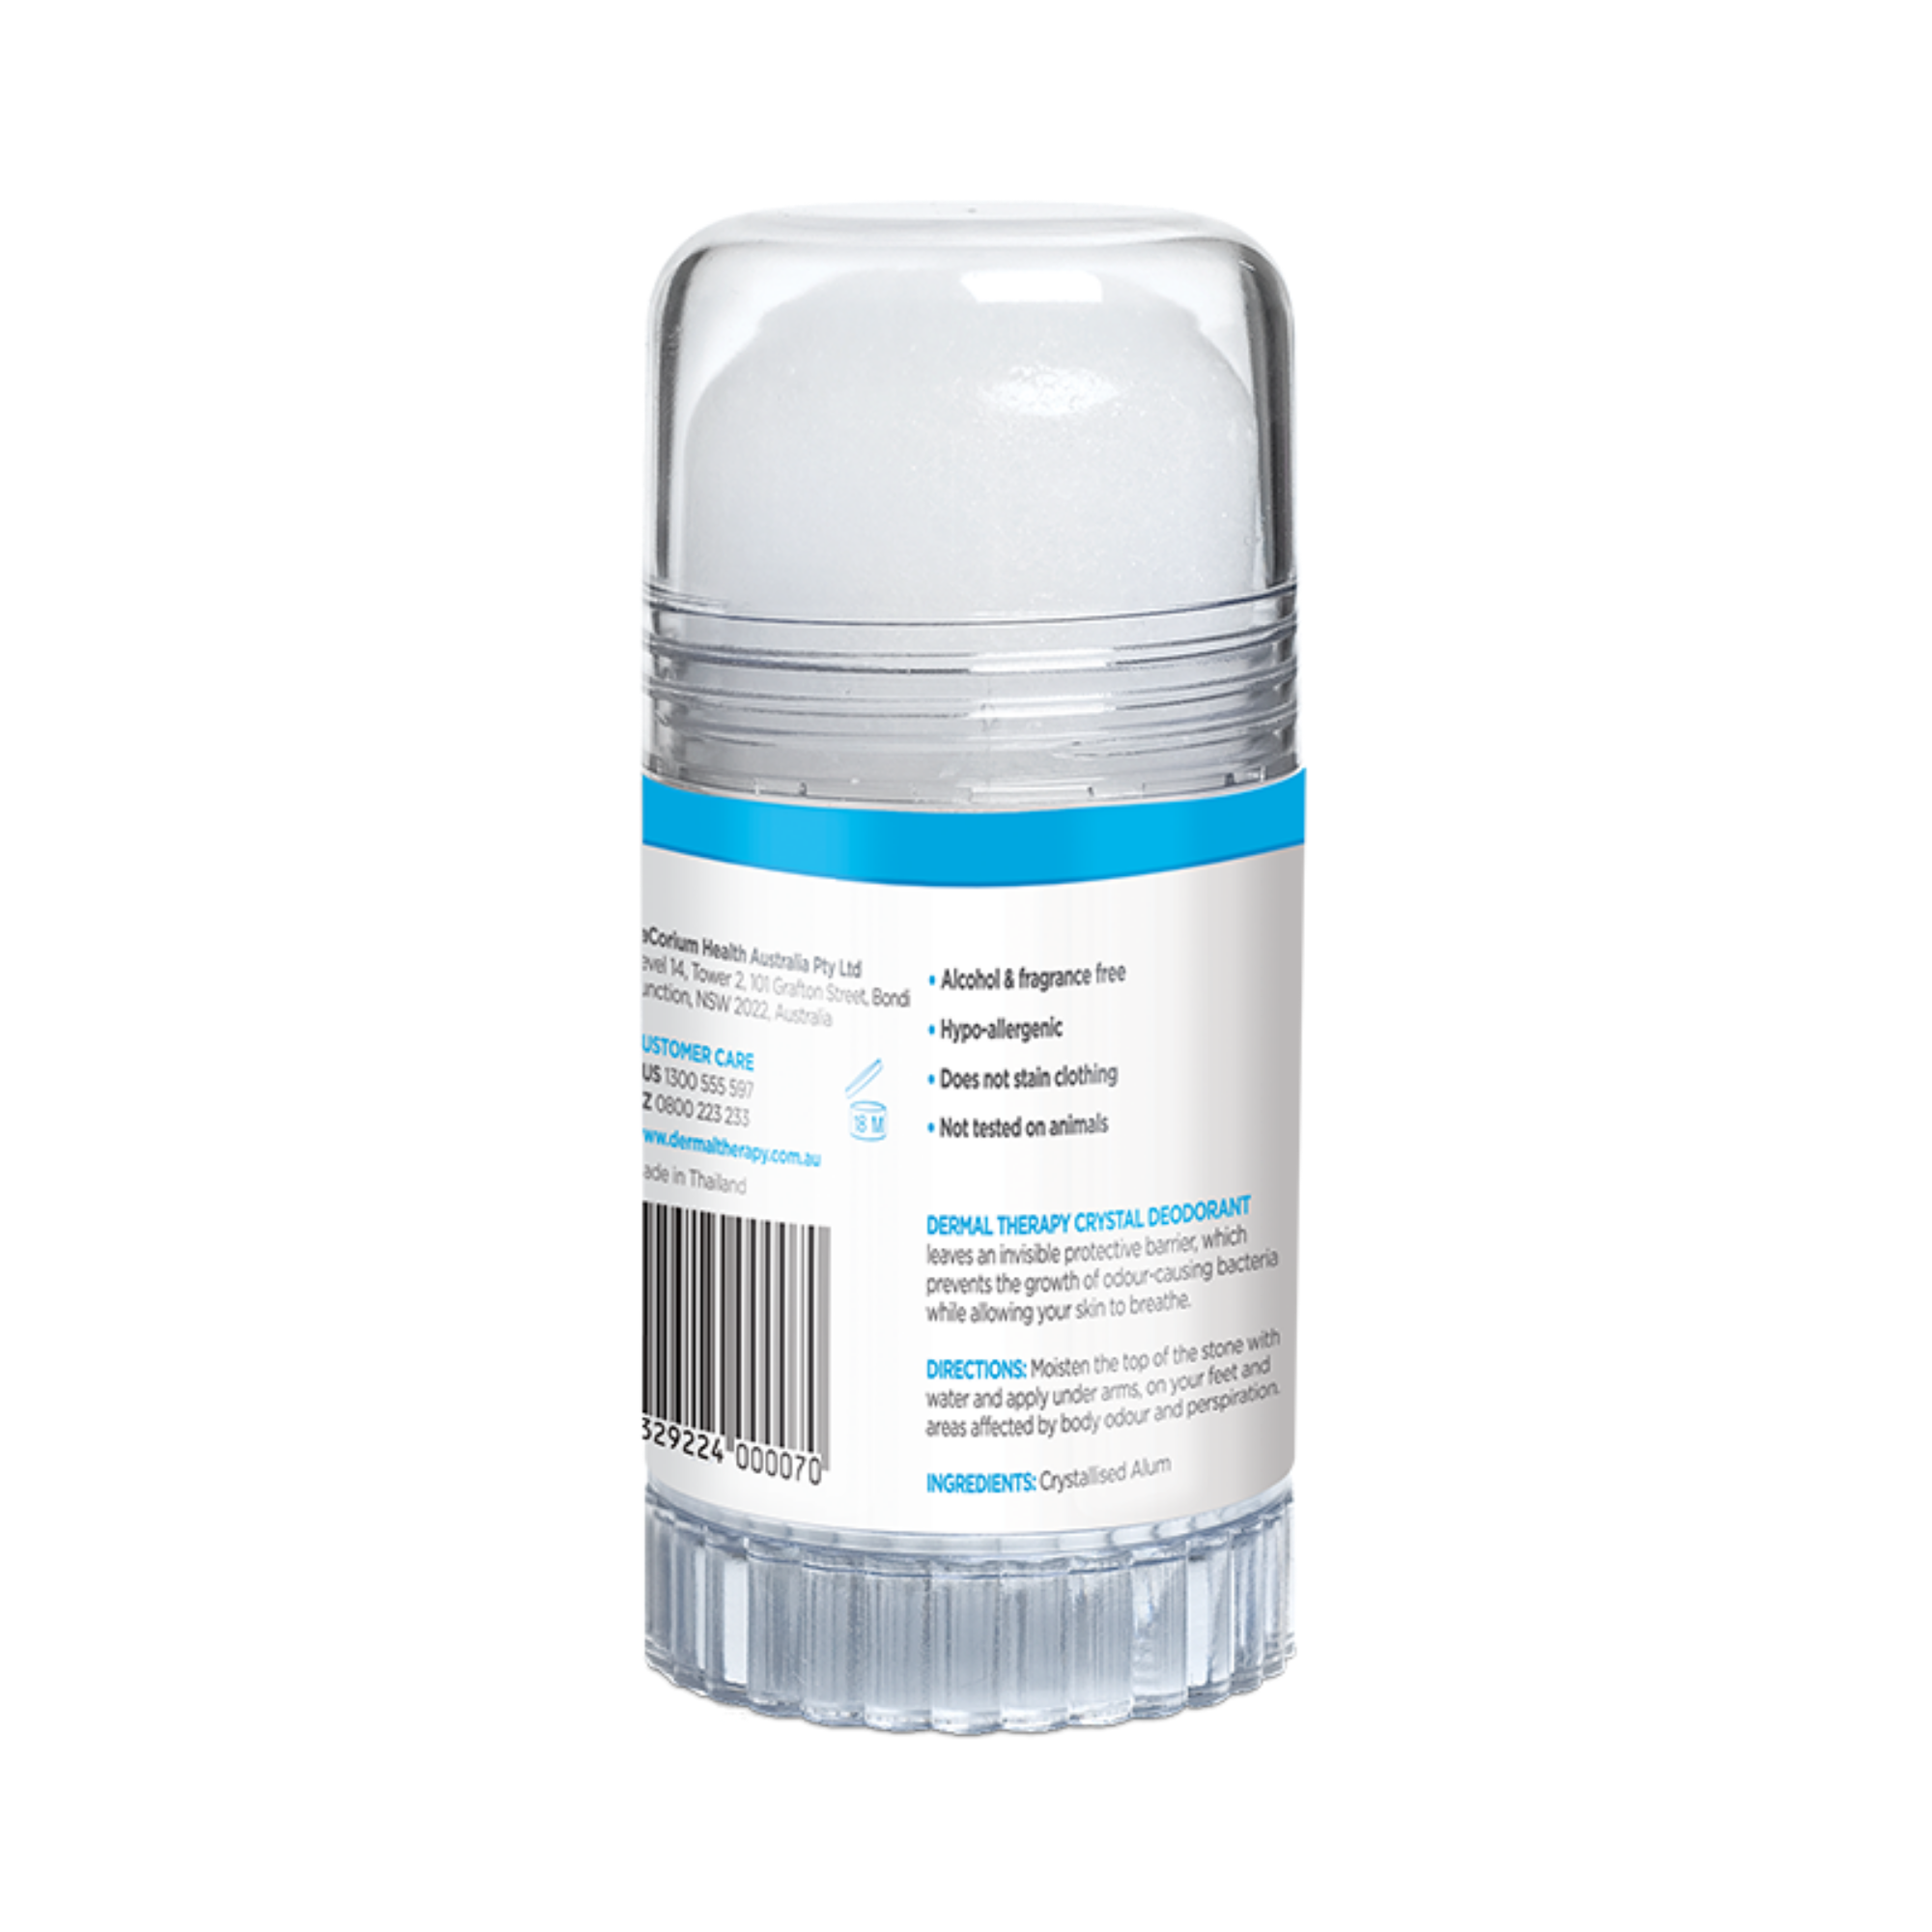 Dermal Therapy Crystal Deodorant 120g